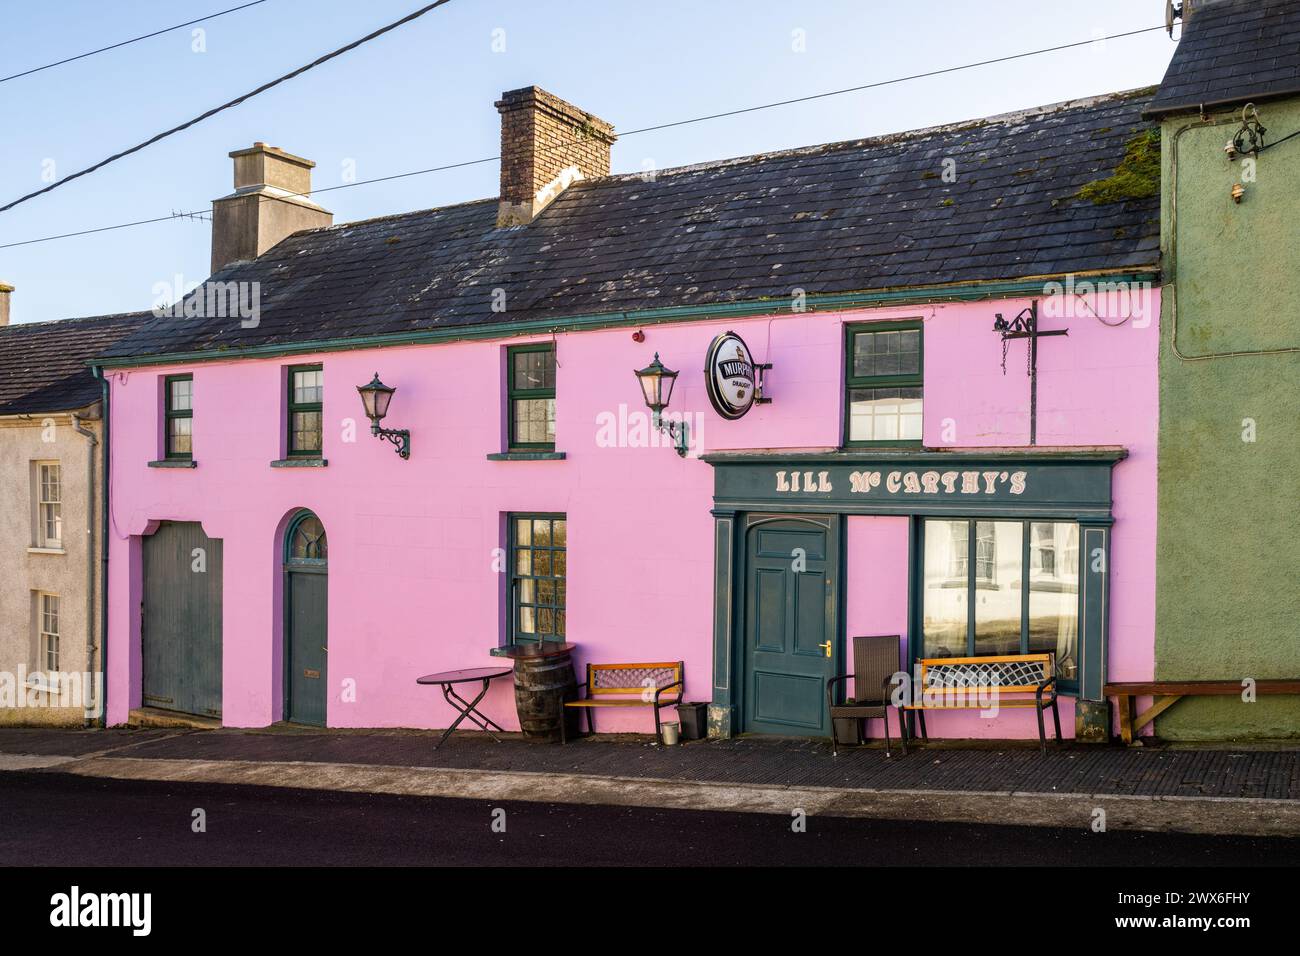 Lill McCArthy's Pub on Main Street, Castletownshend, West Cork, Ireland. Stock Photo